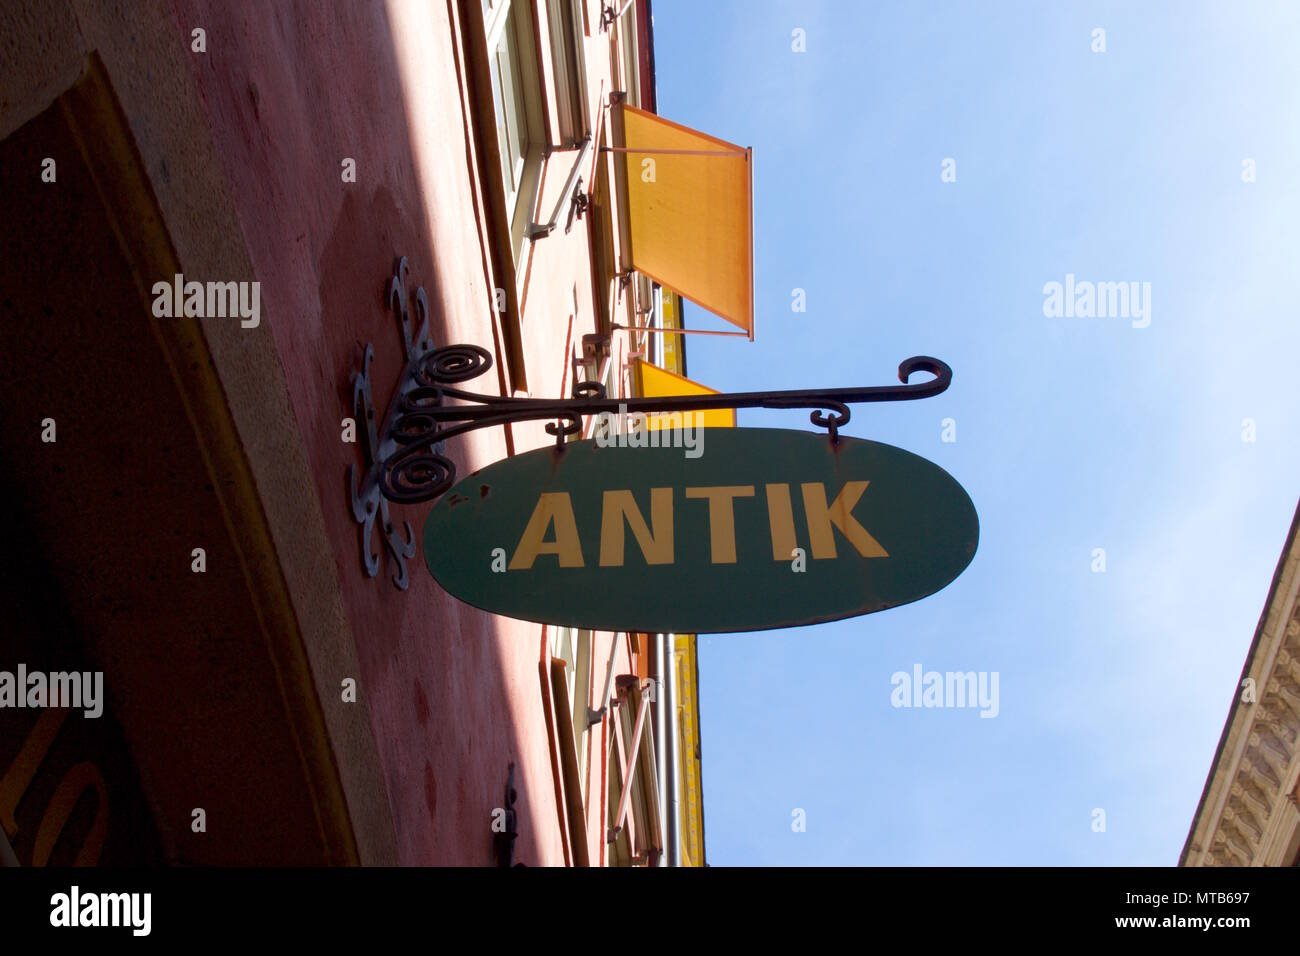 Antique, or Antik in Swedish, Shop Sign in Gamla Stan, Stockholm ...